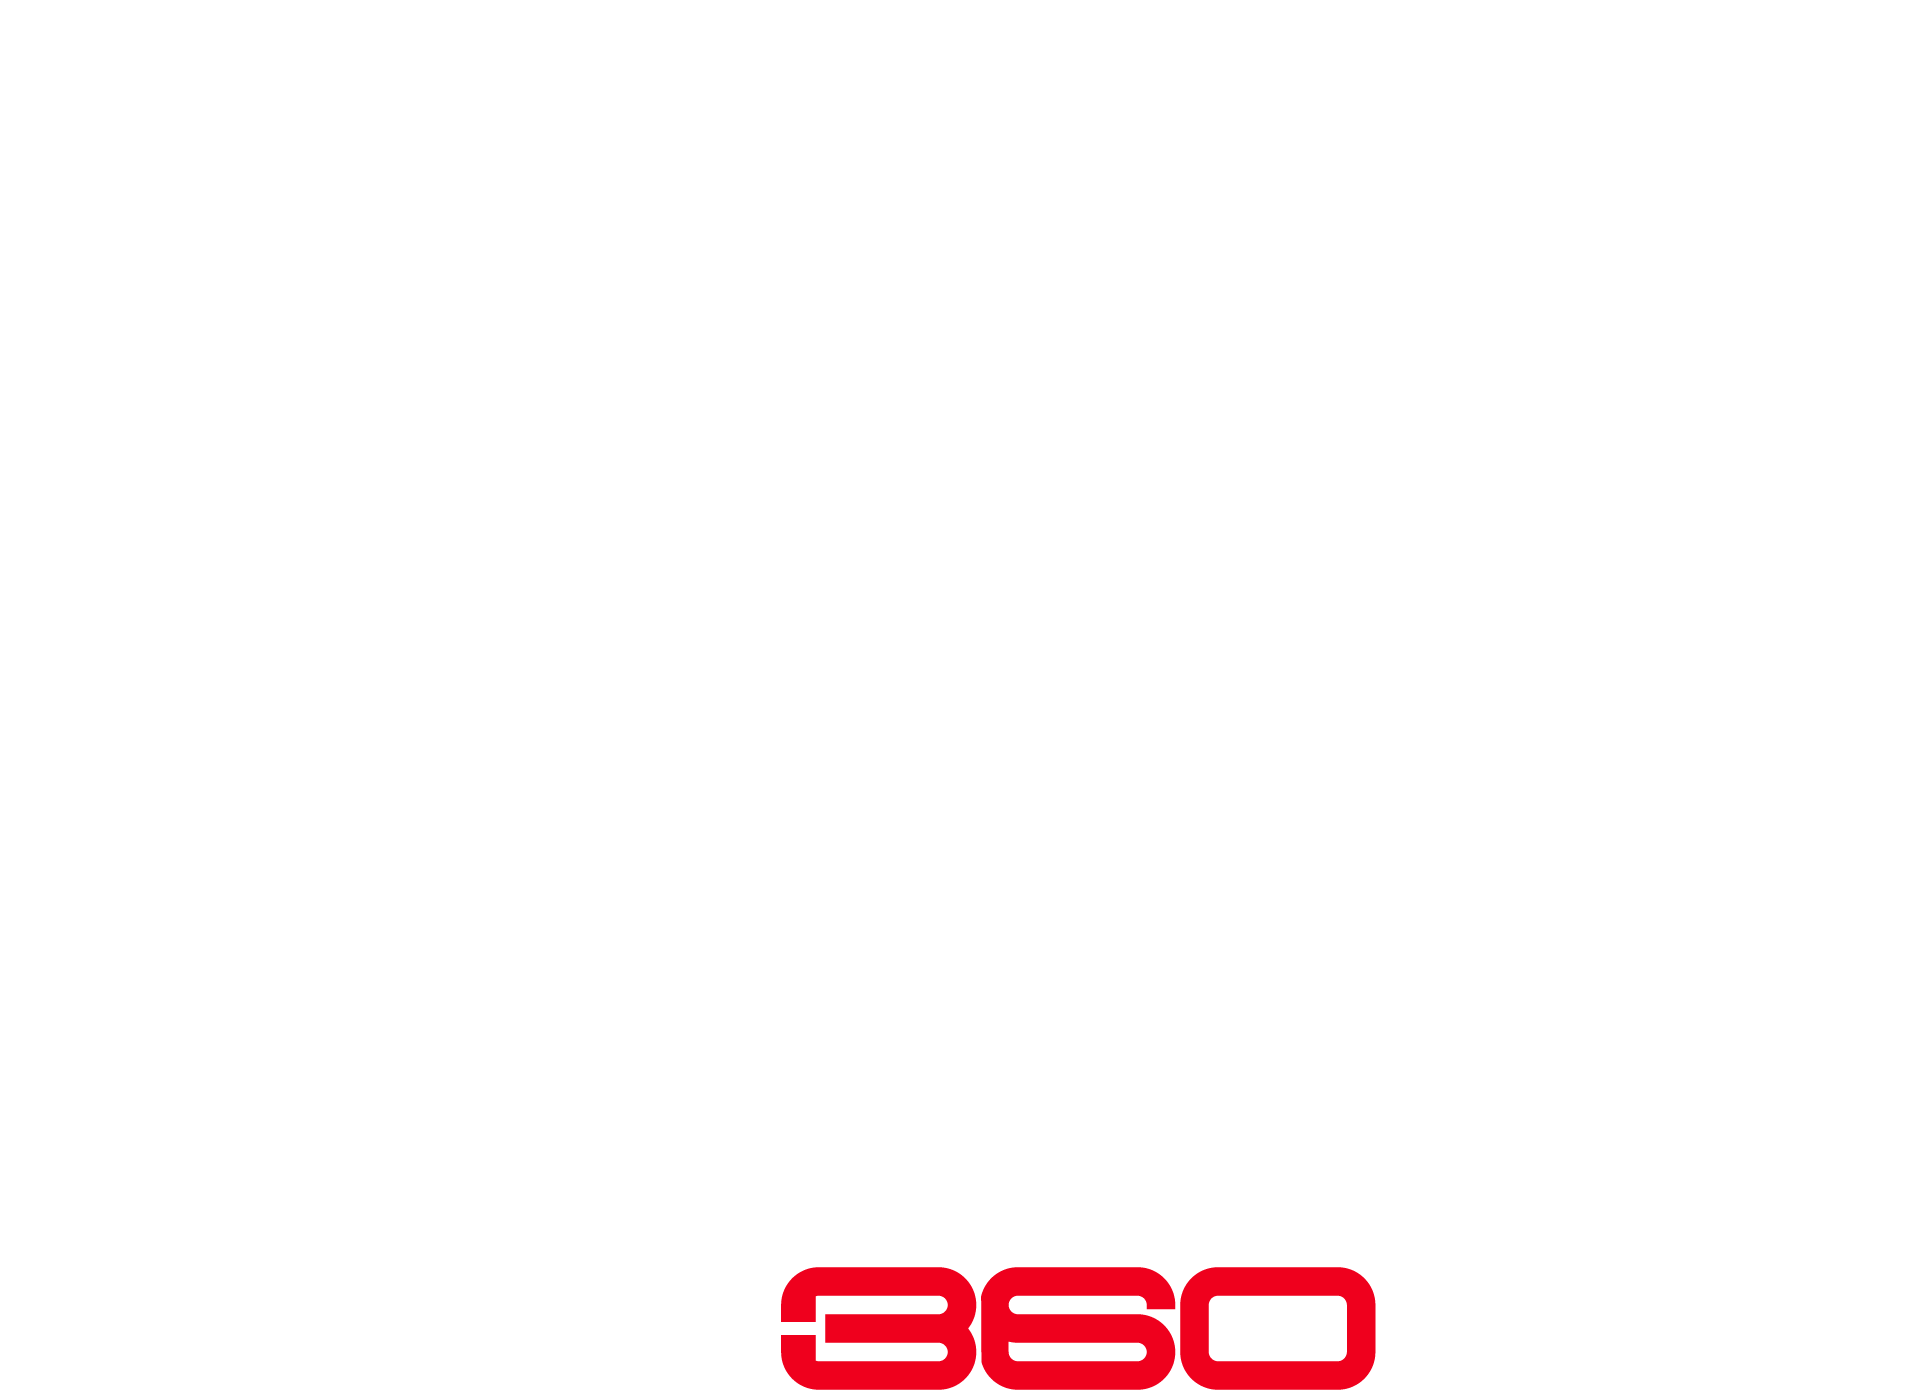 Shoot 360